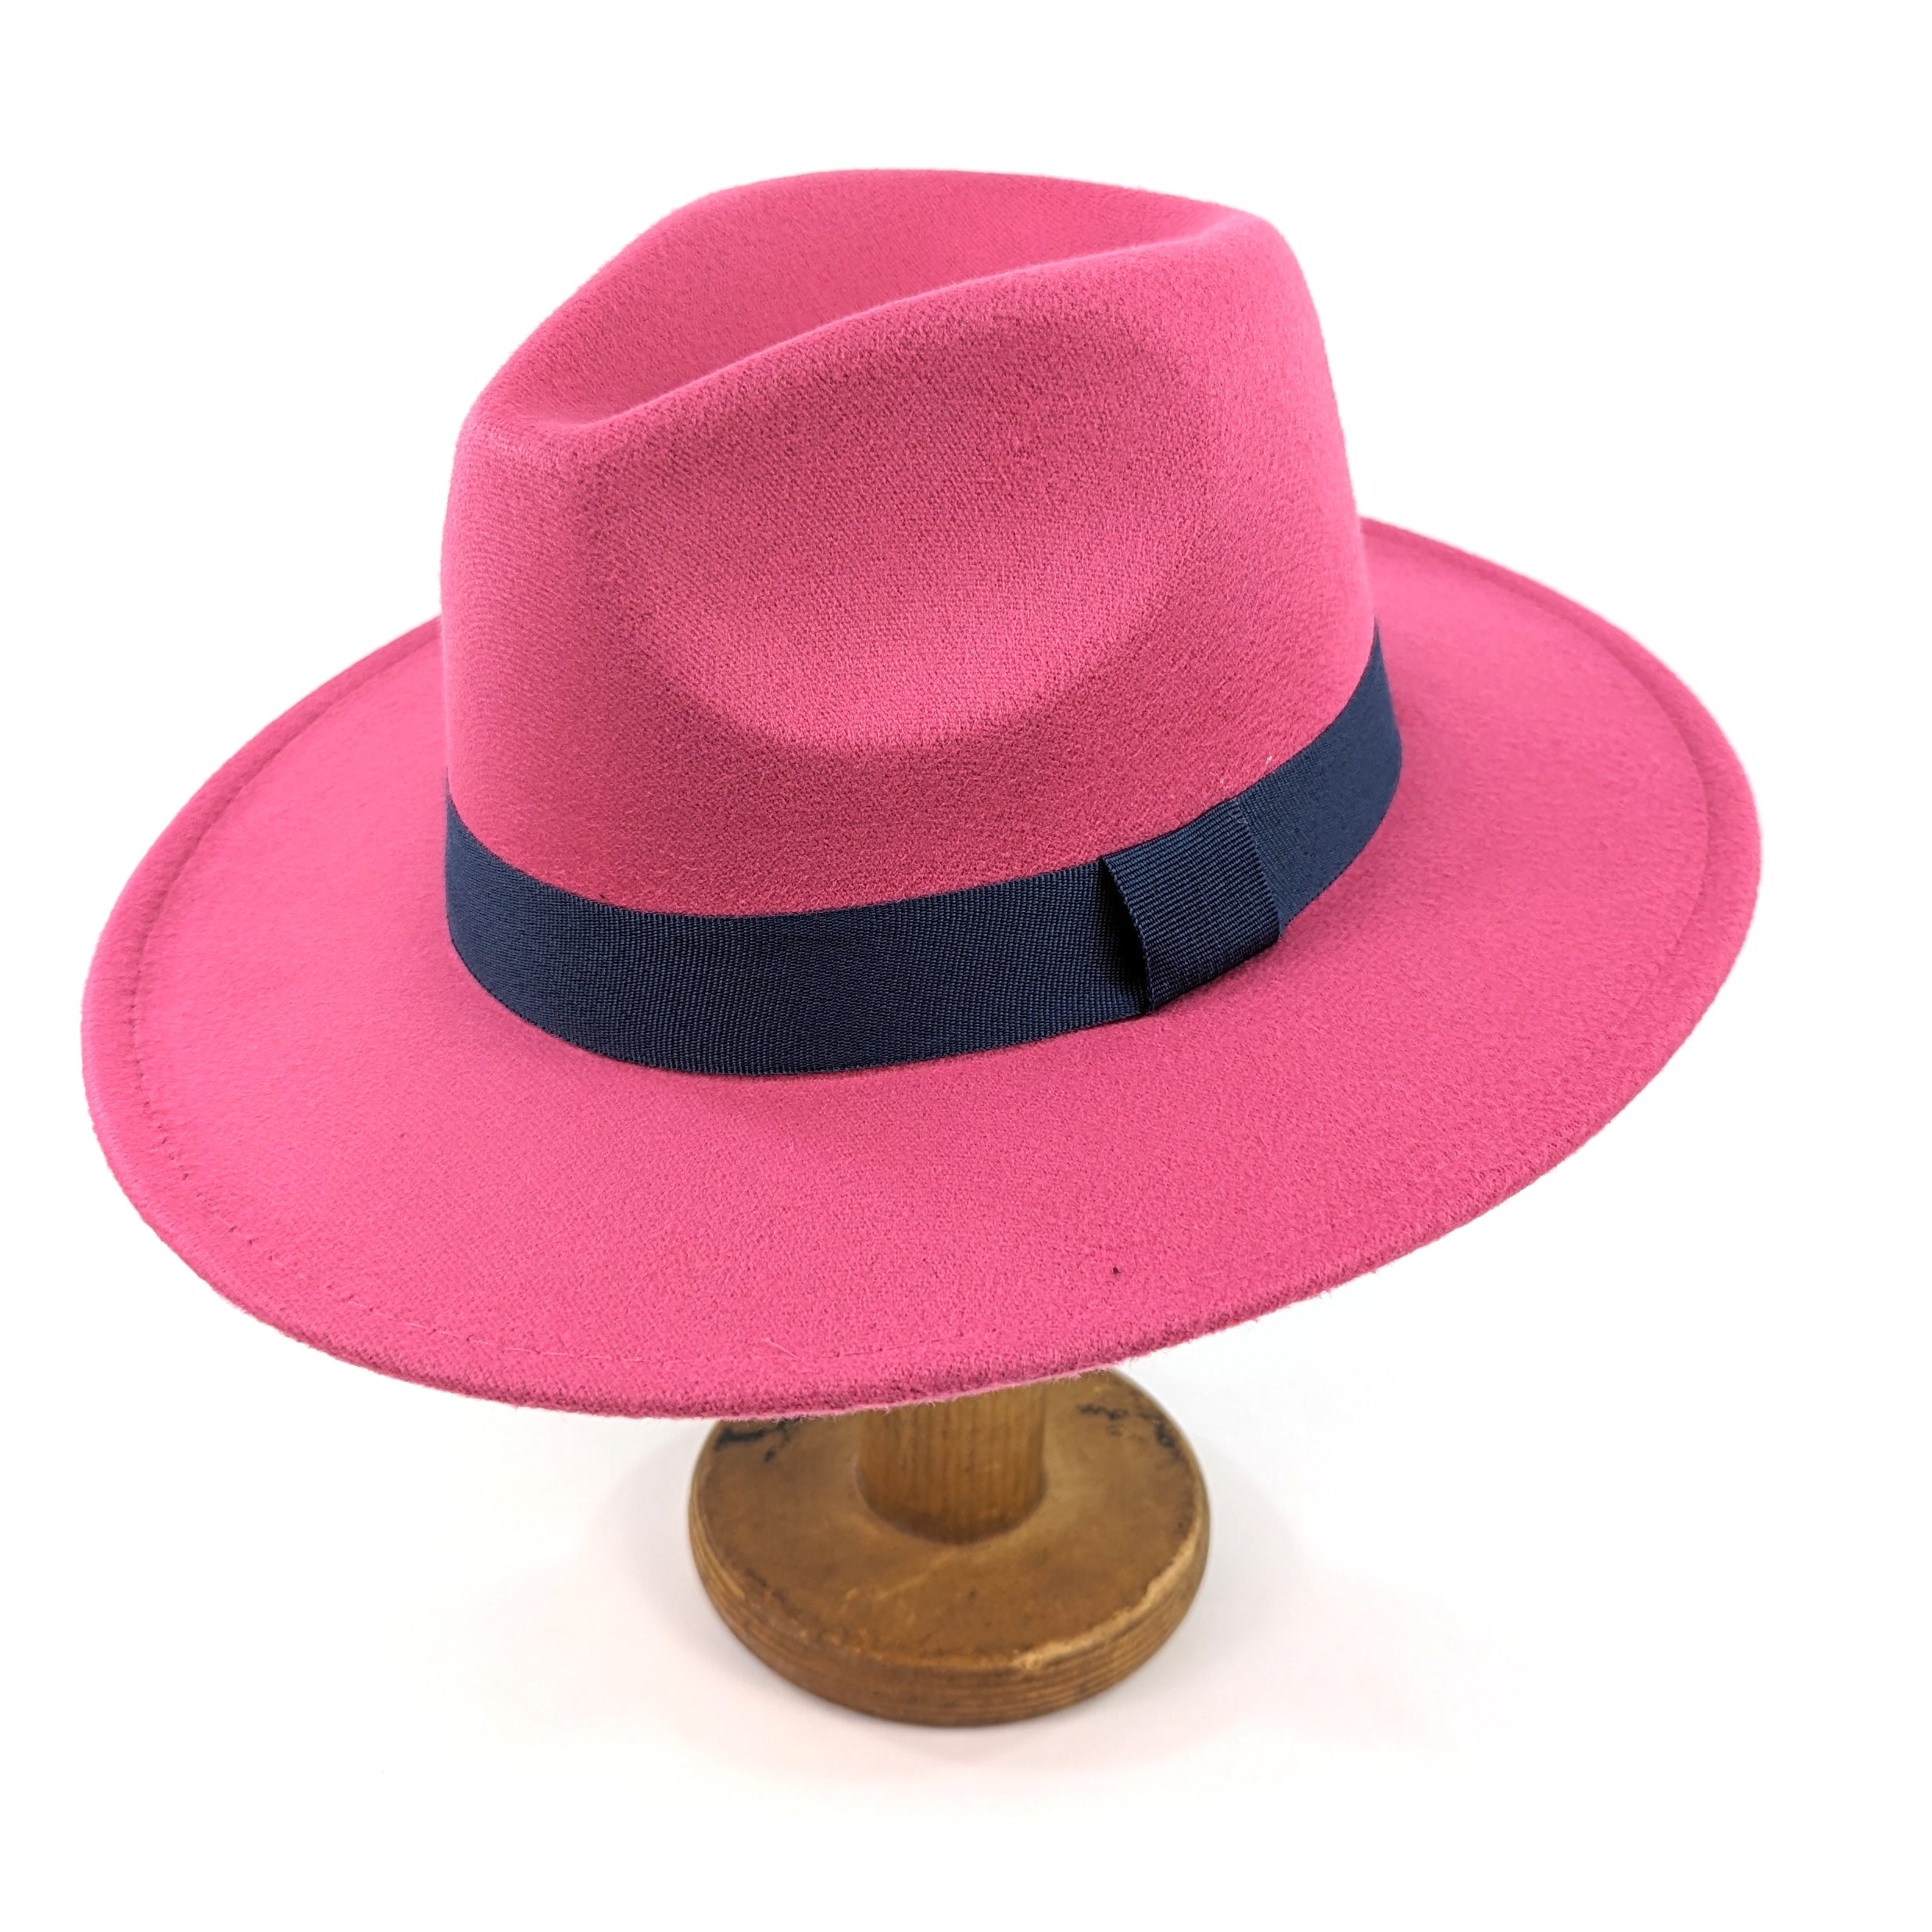 Pink / Black Fedora Hat